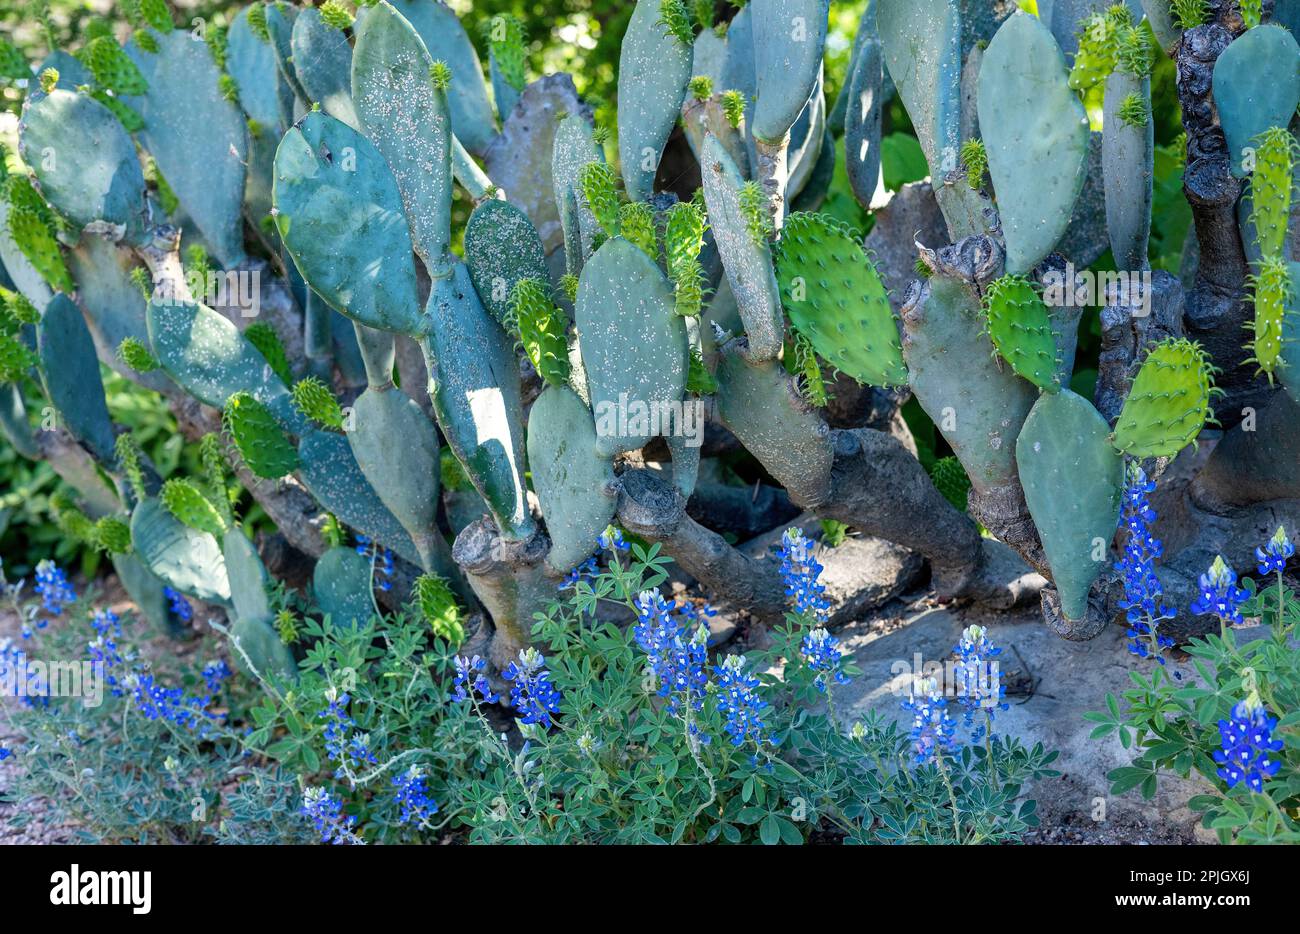 Bluebonnets growing next to cactus plants Stock Photo